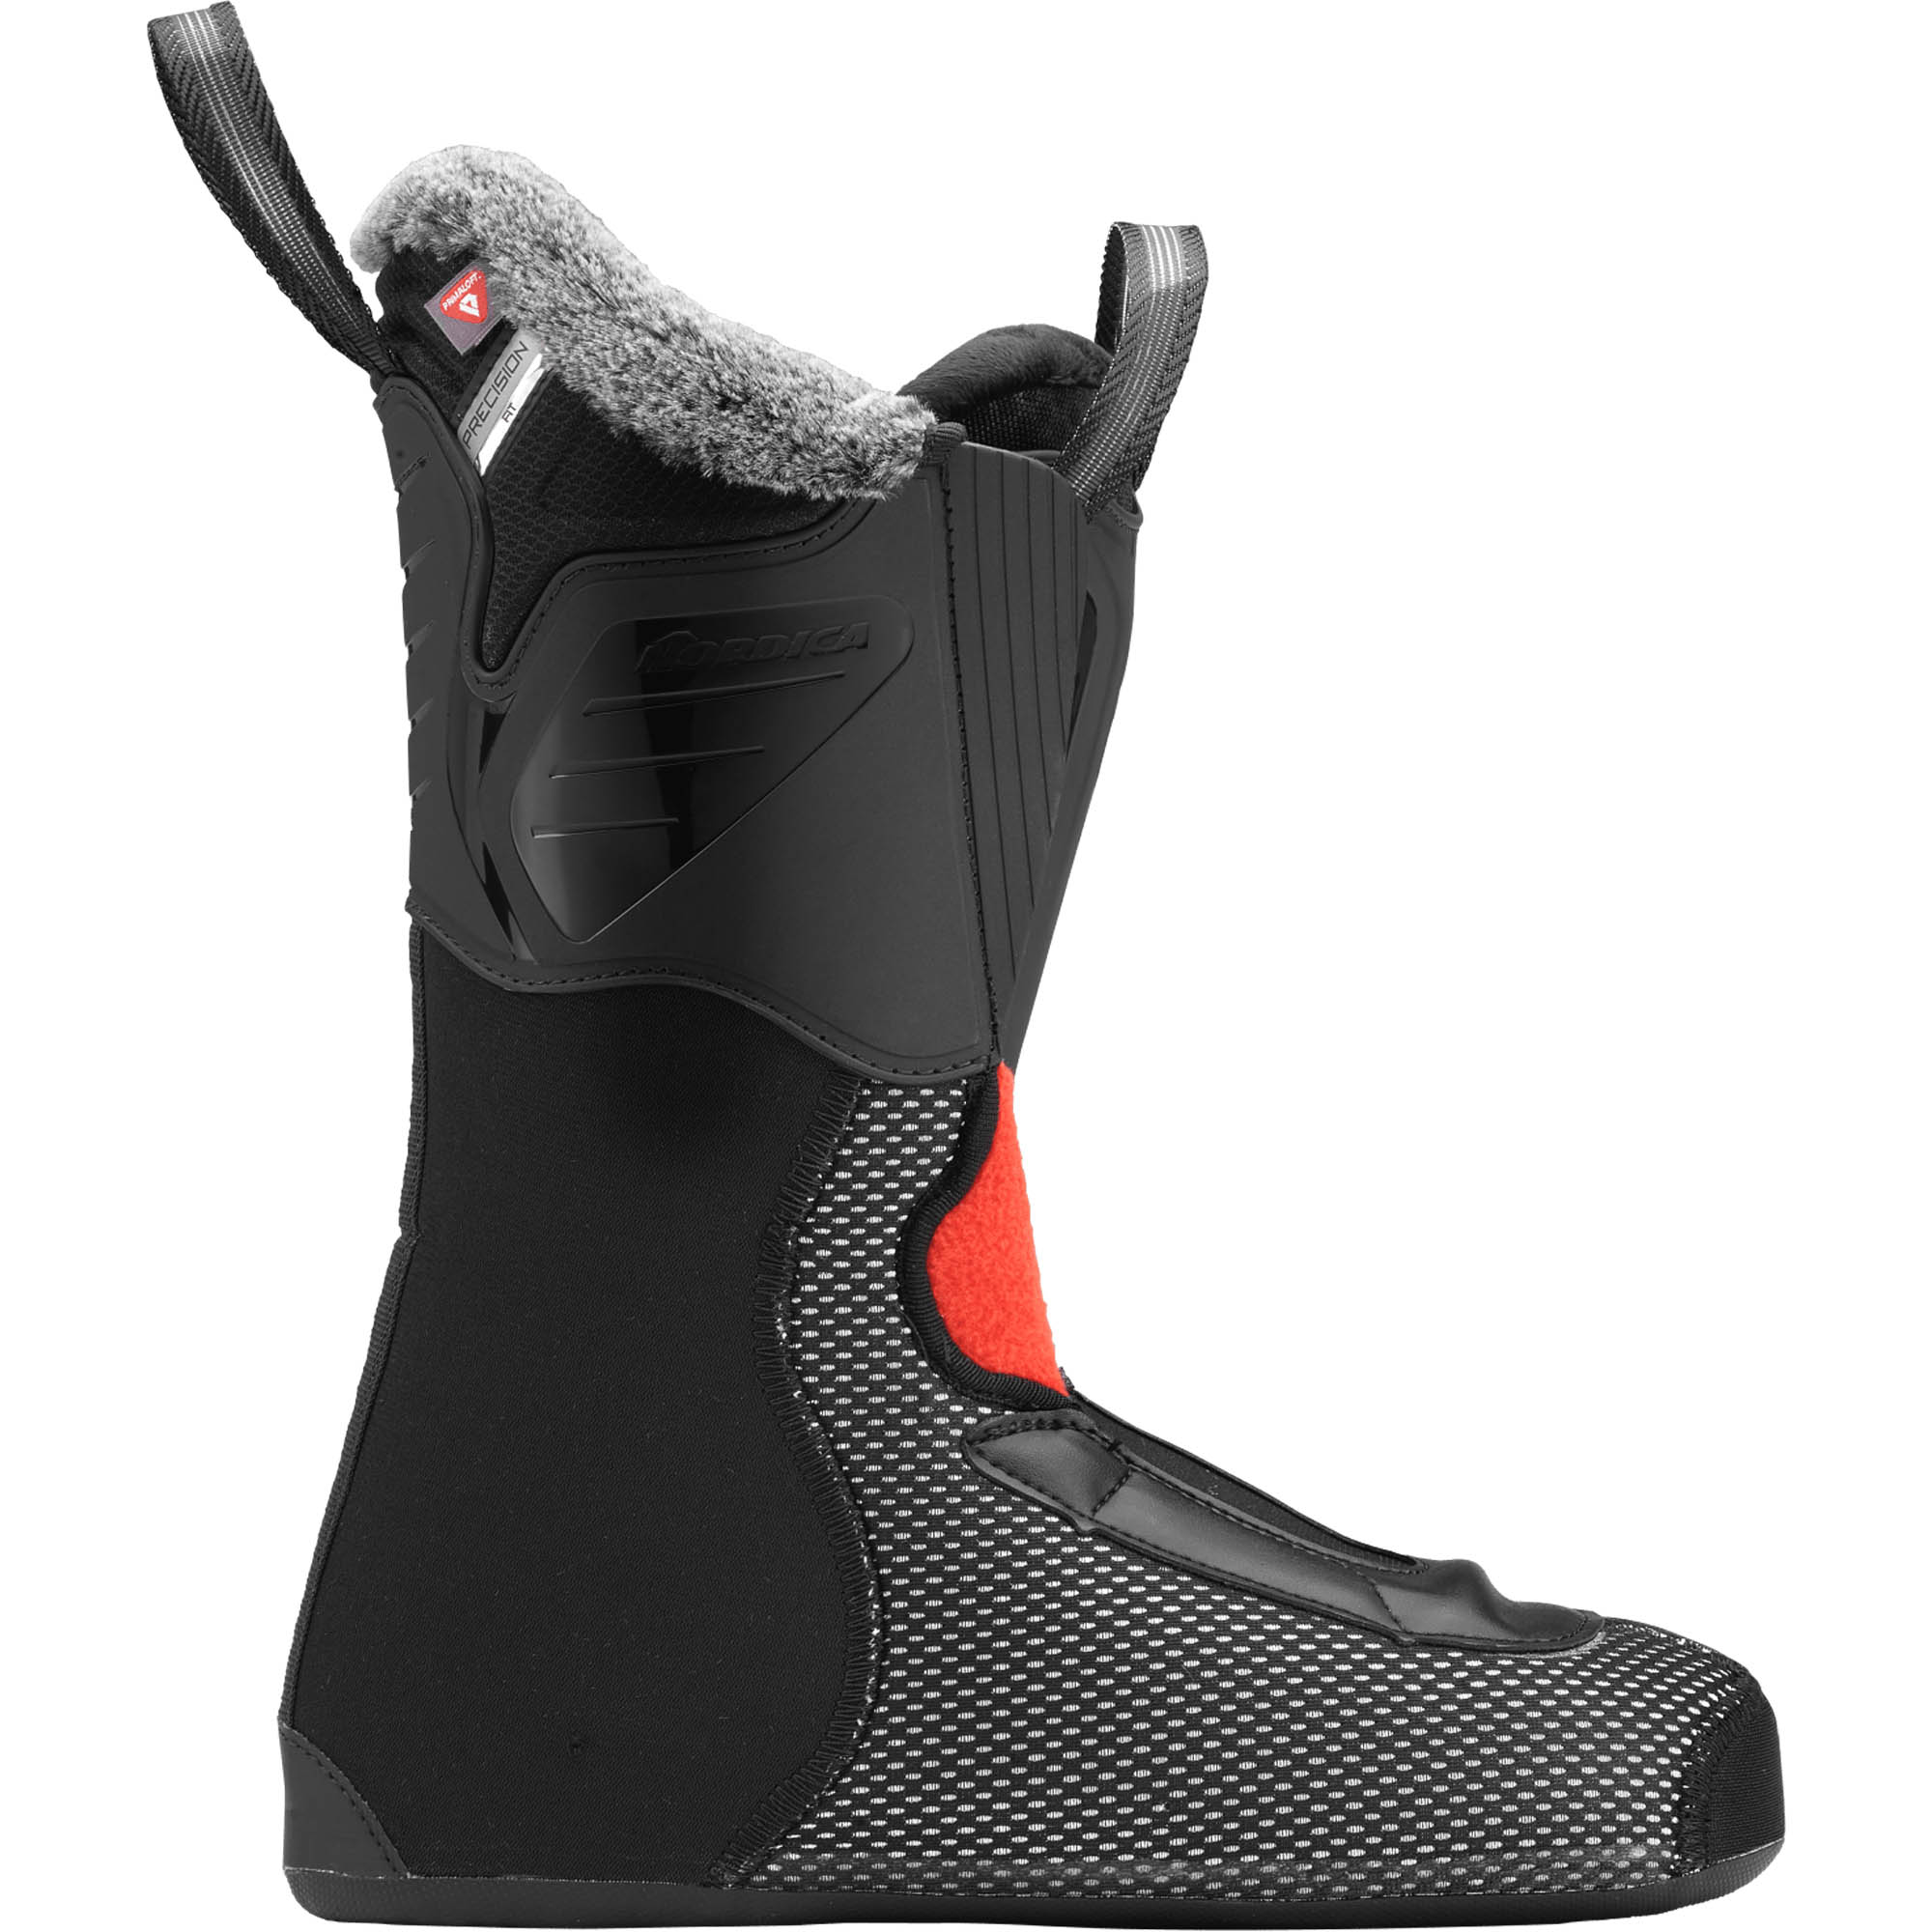 Nordica Sportmachine 3 85 W GW Women's GripWalk Ski Boots